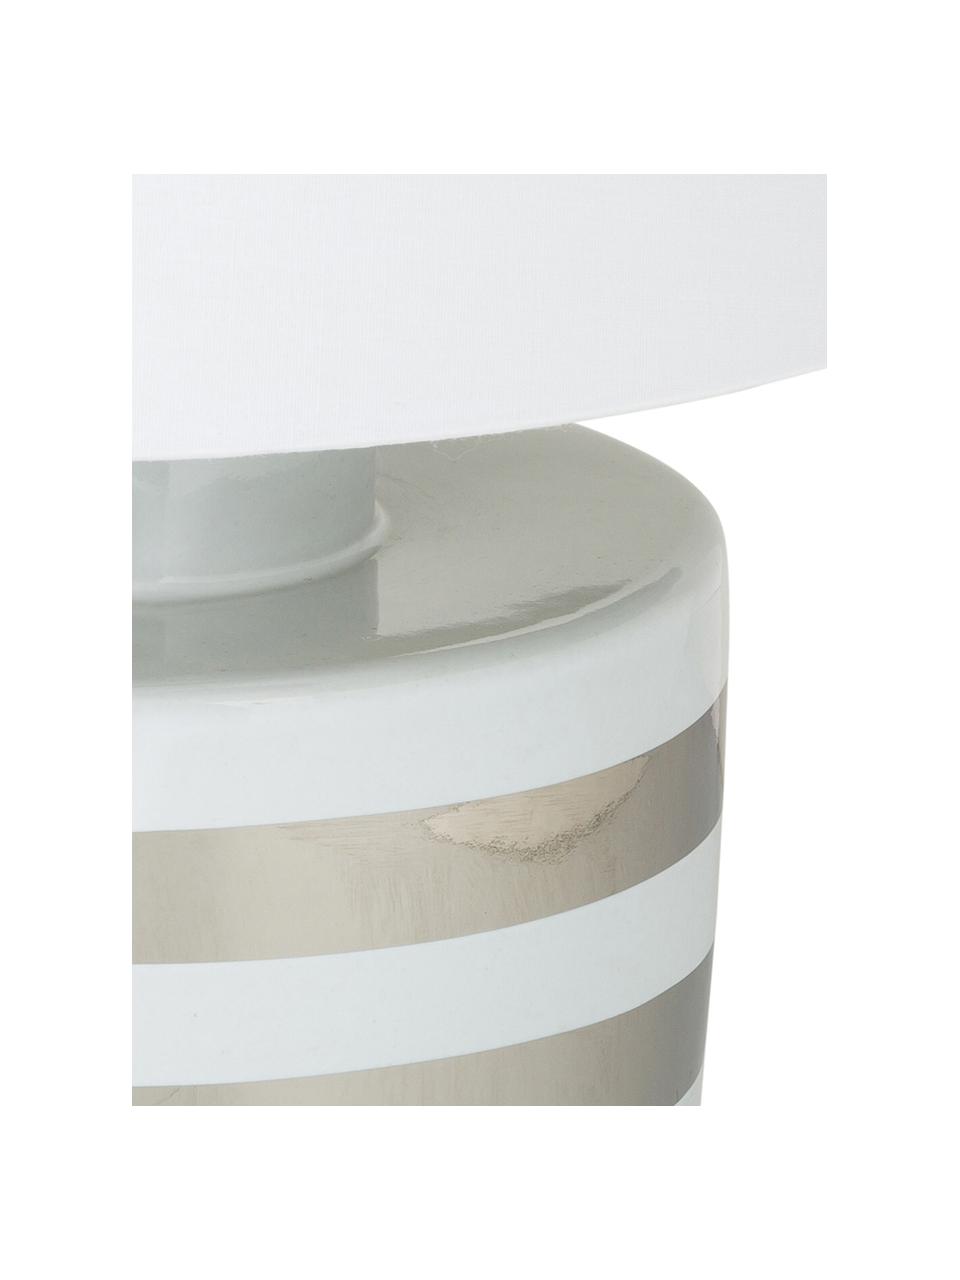 Keramik-Tischlampe Sylvia, Lampenschirm: Textil, Lampenfuß: Keramik, Weiß, Silberfarben, Ø 25 x H 39 cm